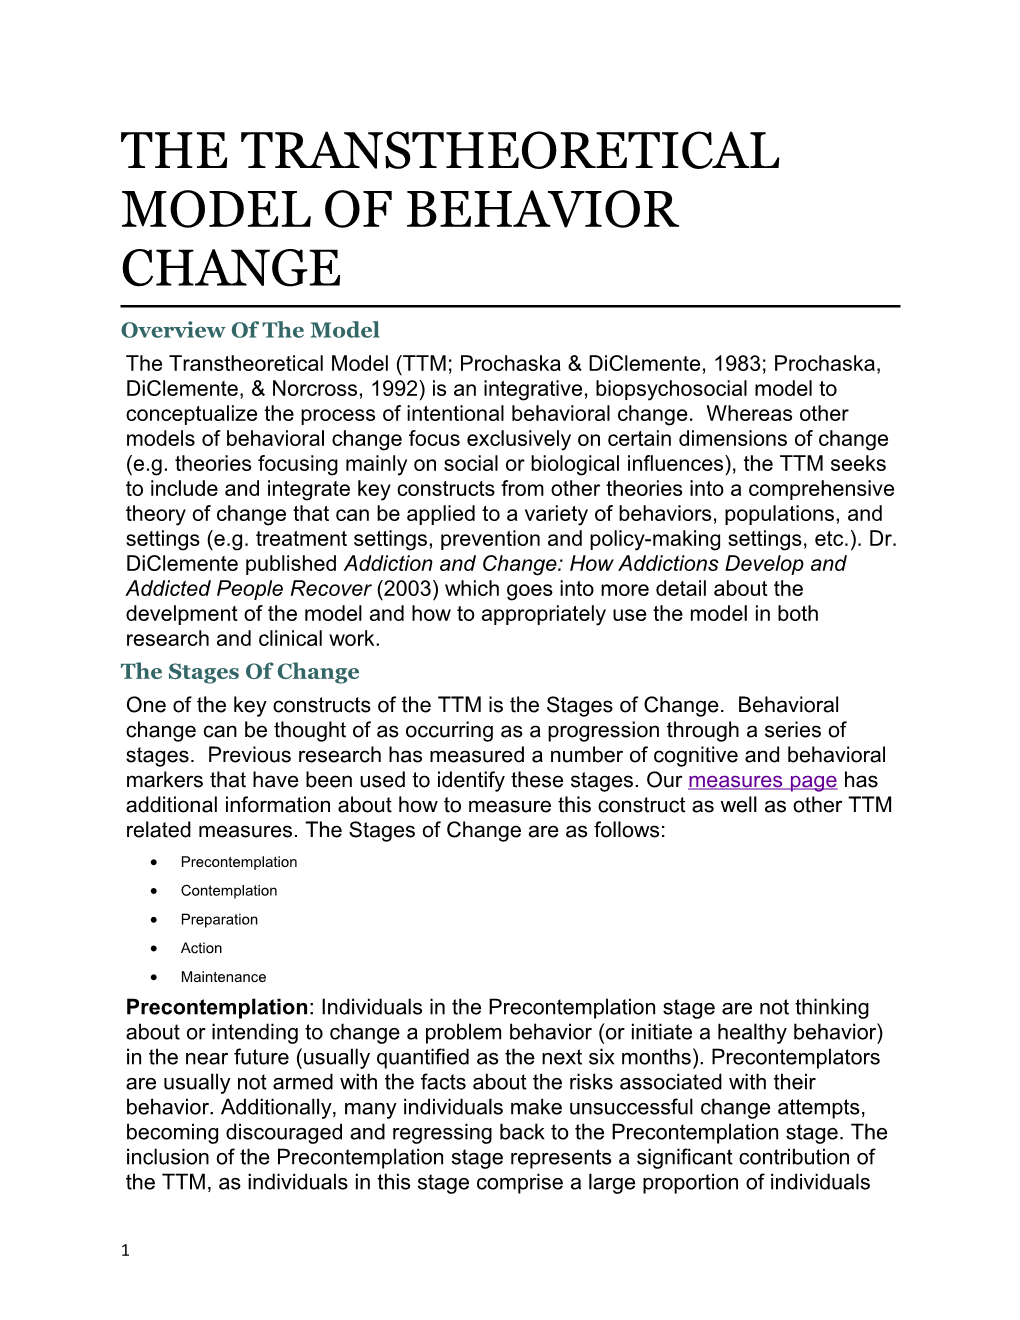 The Transtheoretical Model of Behavior Change